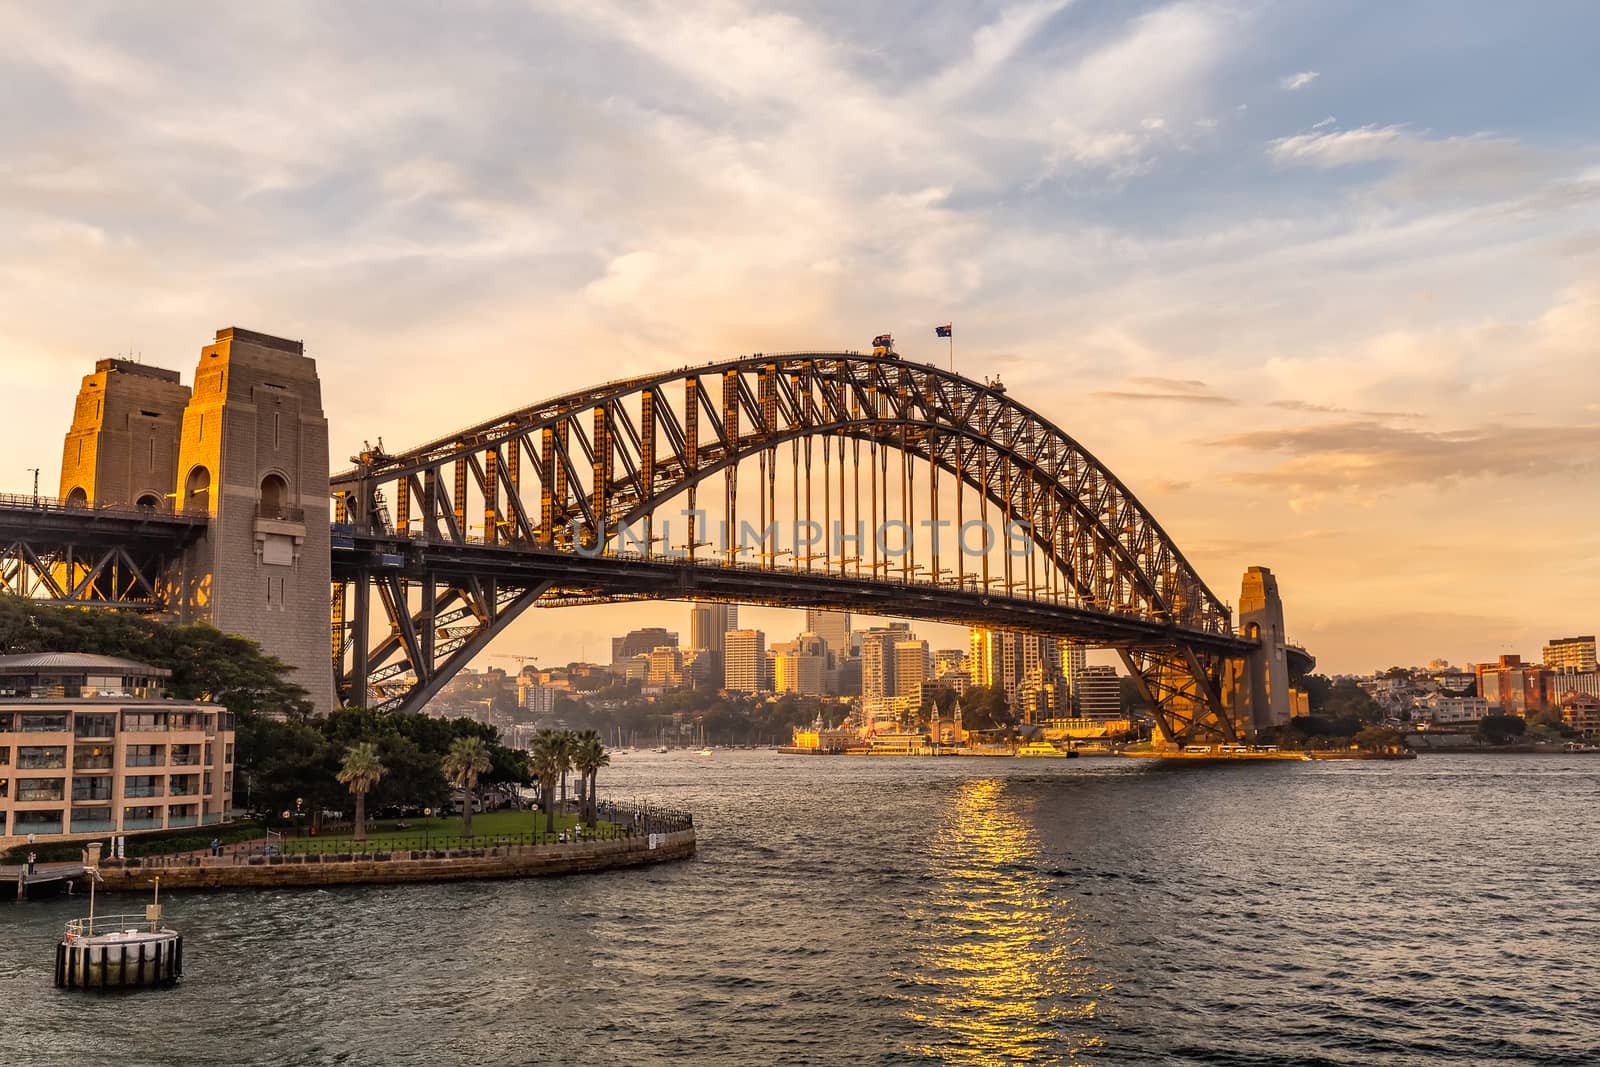 View of Sydney Harbor Bridge at sunset by DamantisZ